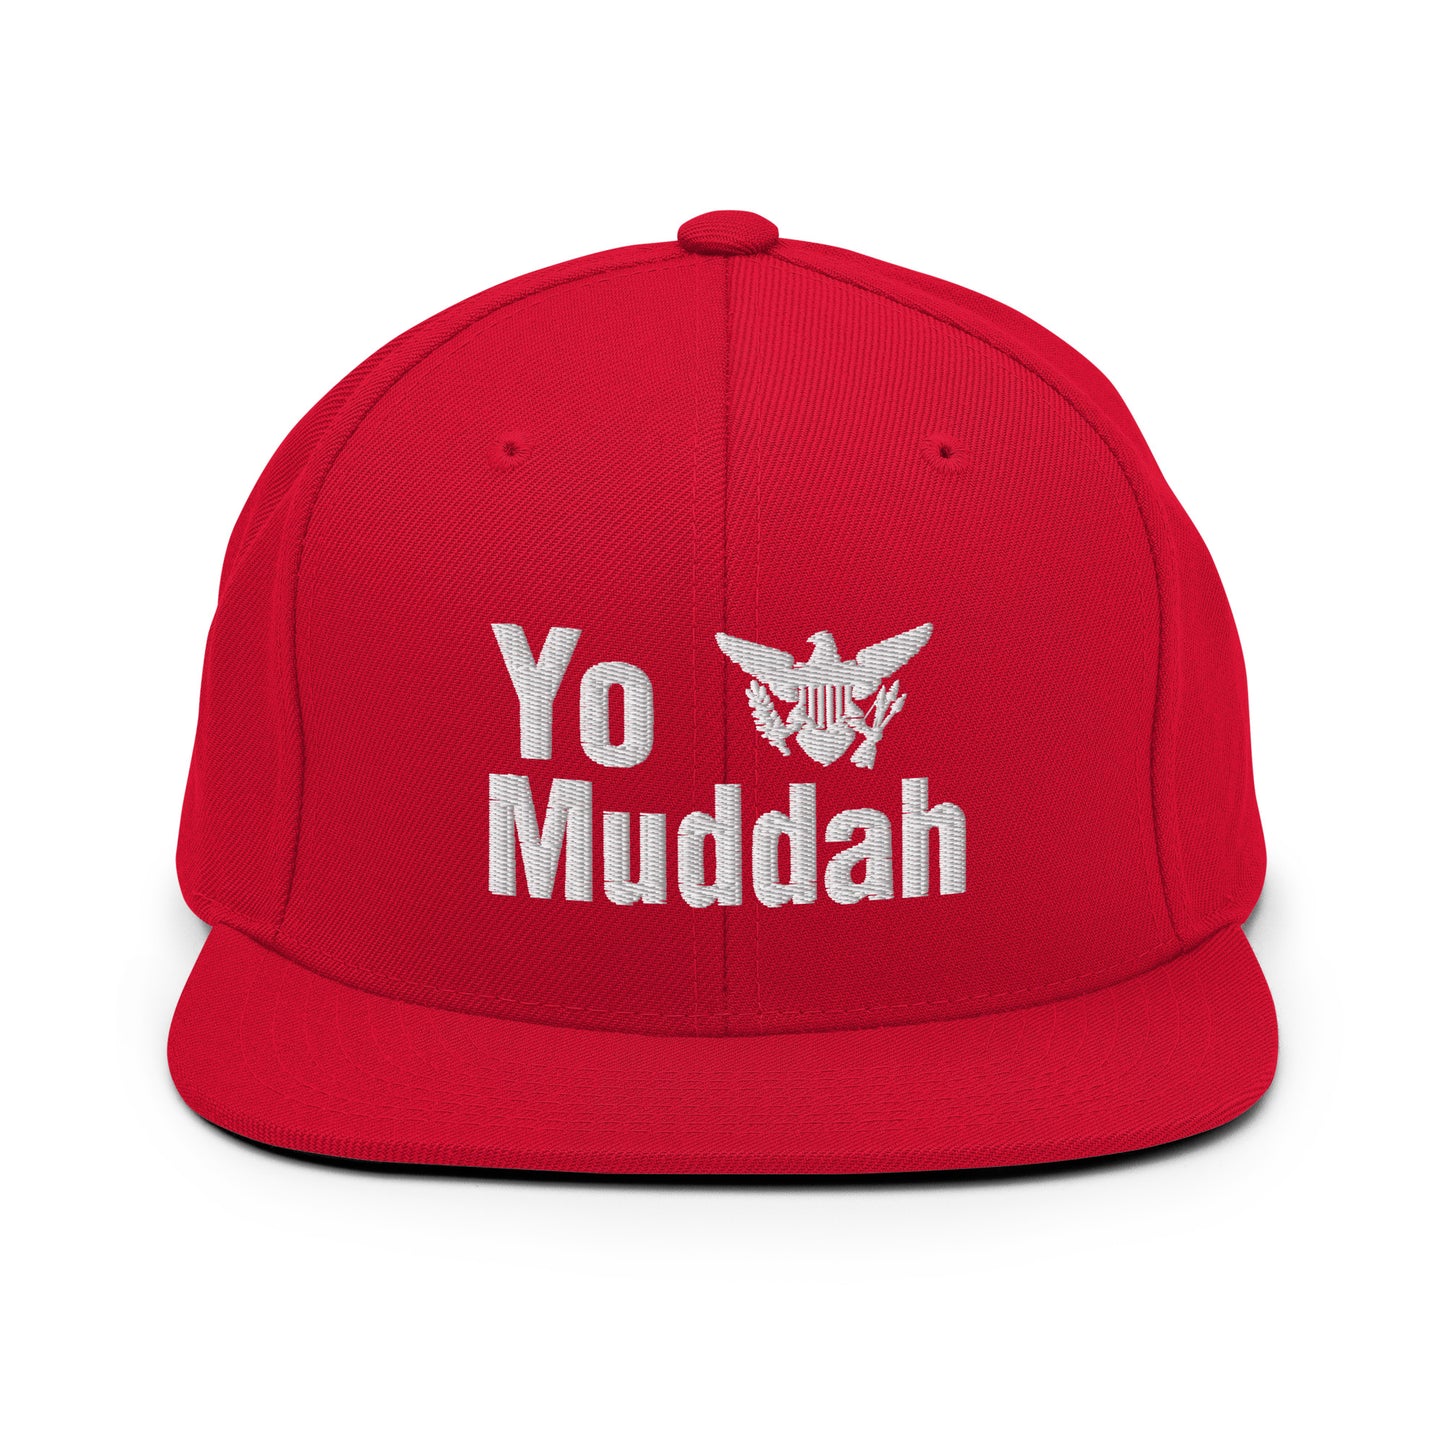 Yo Muddah Snapback Hat | Phade Fashion Virgin Islands